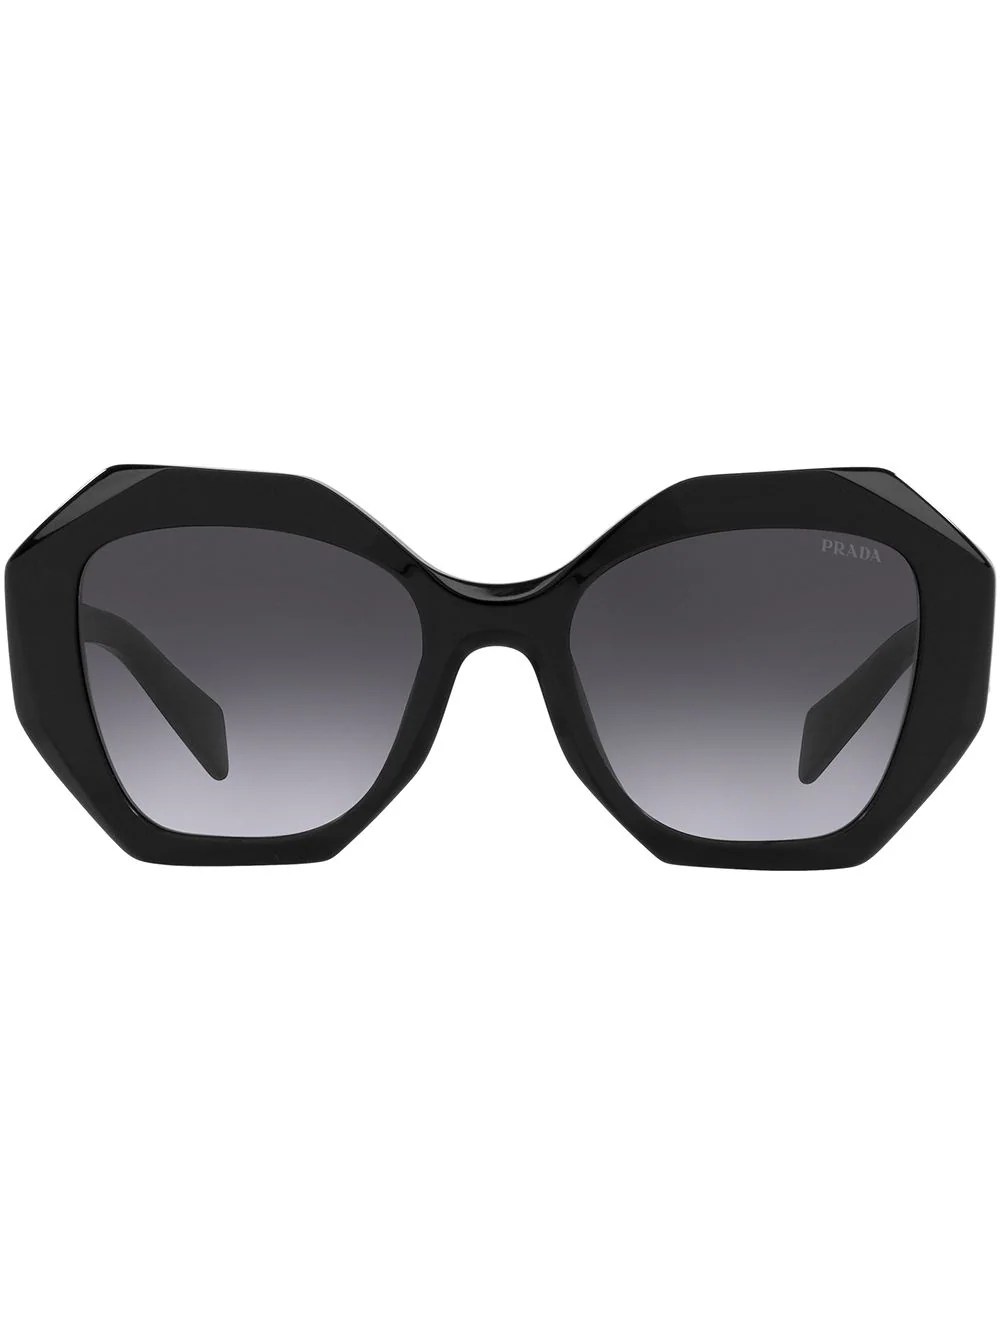 Prada Eyewear
Oversize-frame gradient sunglasses